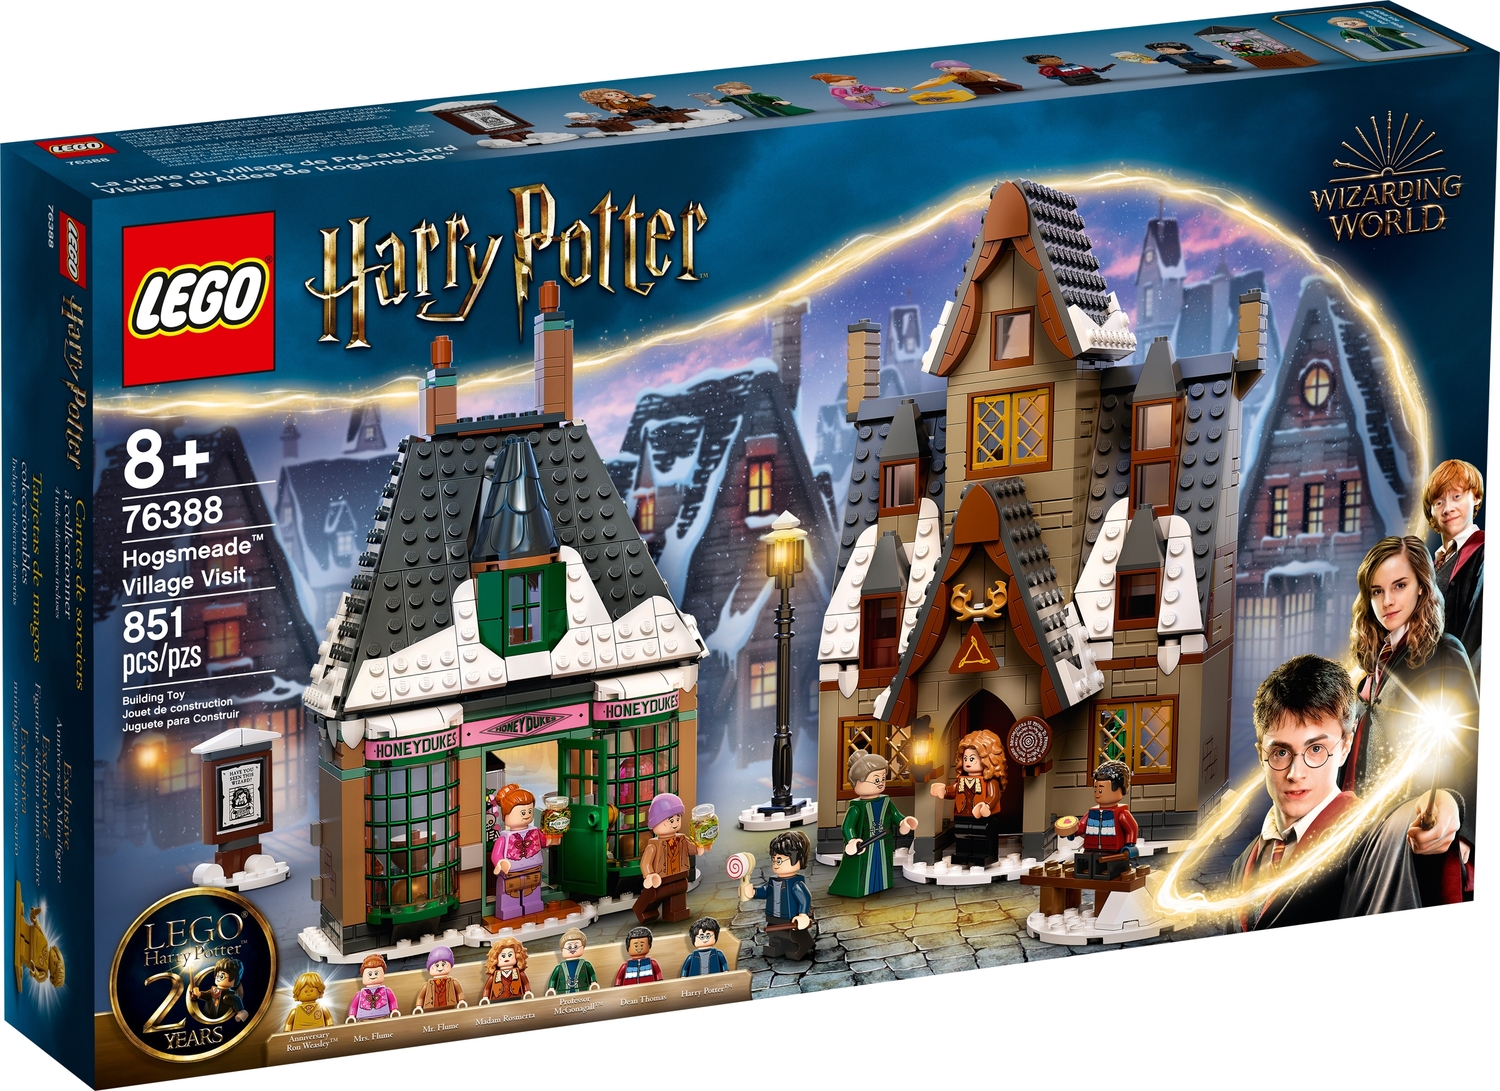 LEGO IDEAS - Celebrate 20 years of magic with LEGO Harry Potter™!